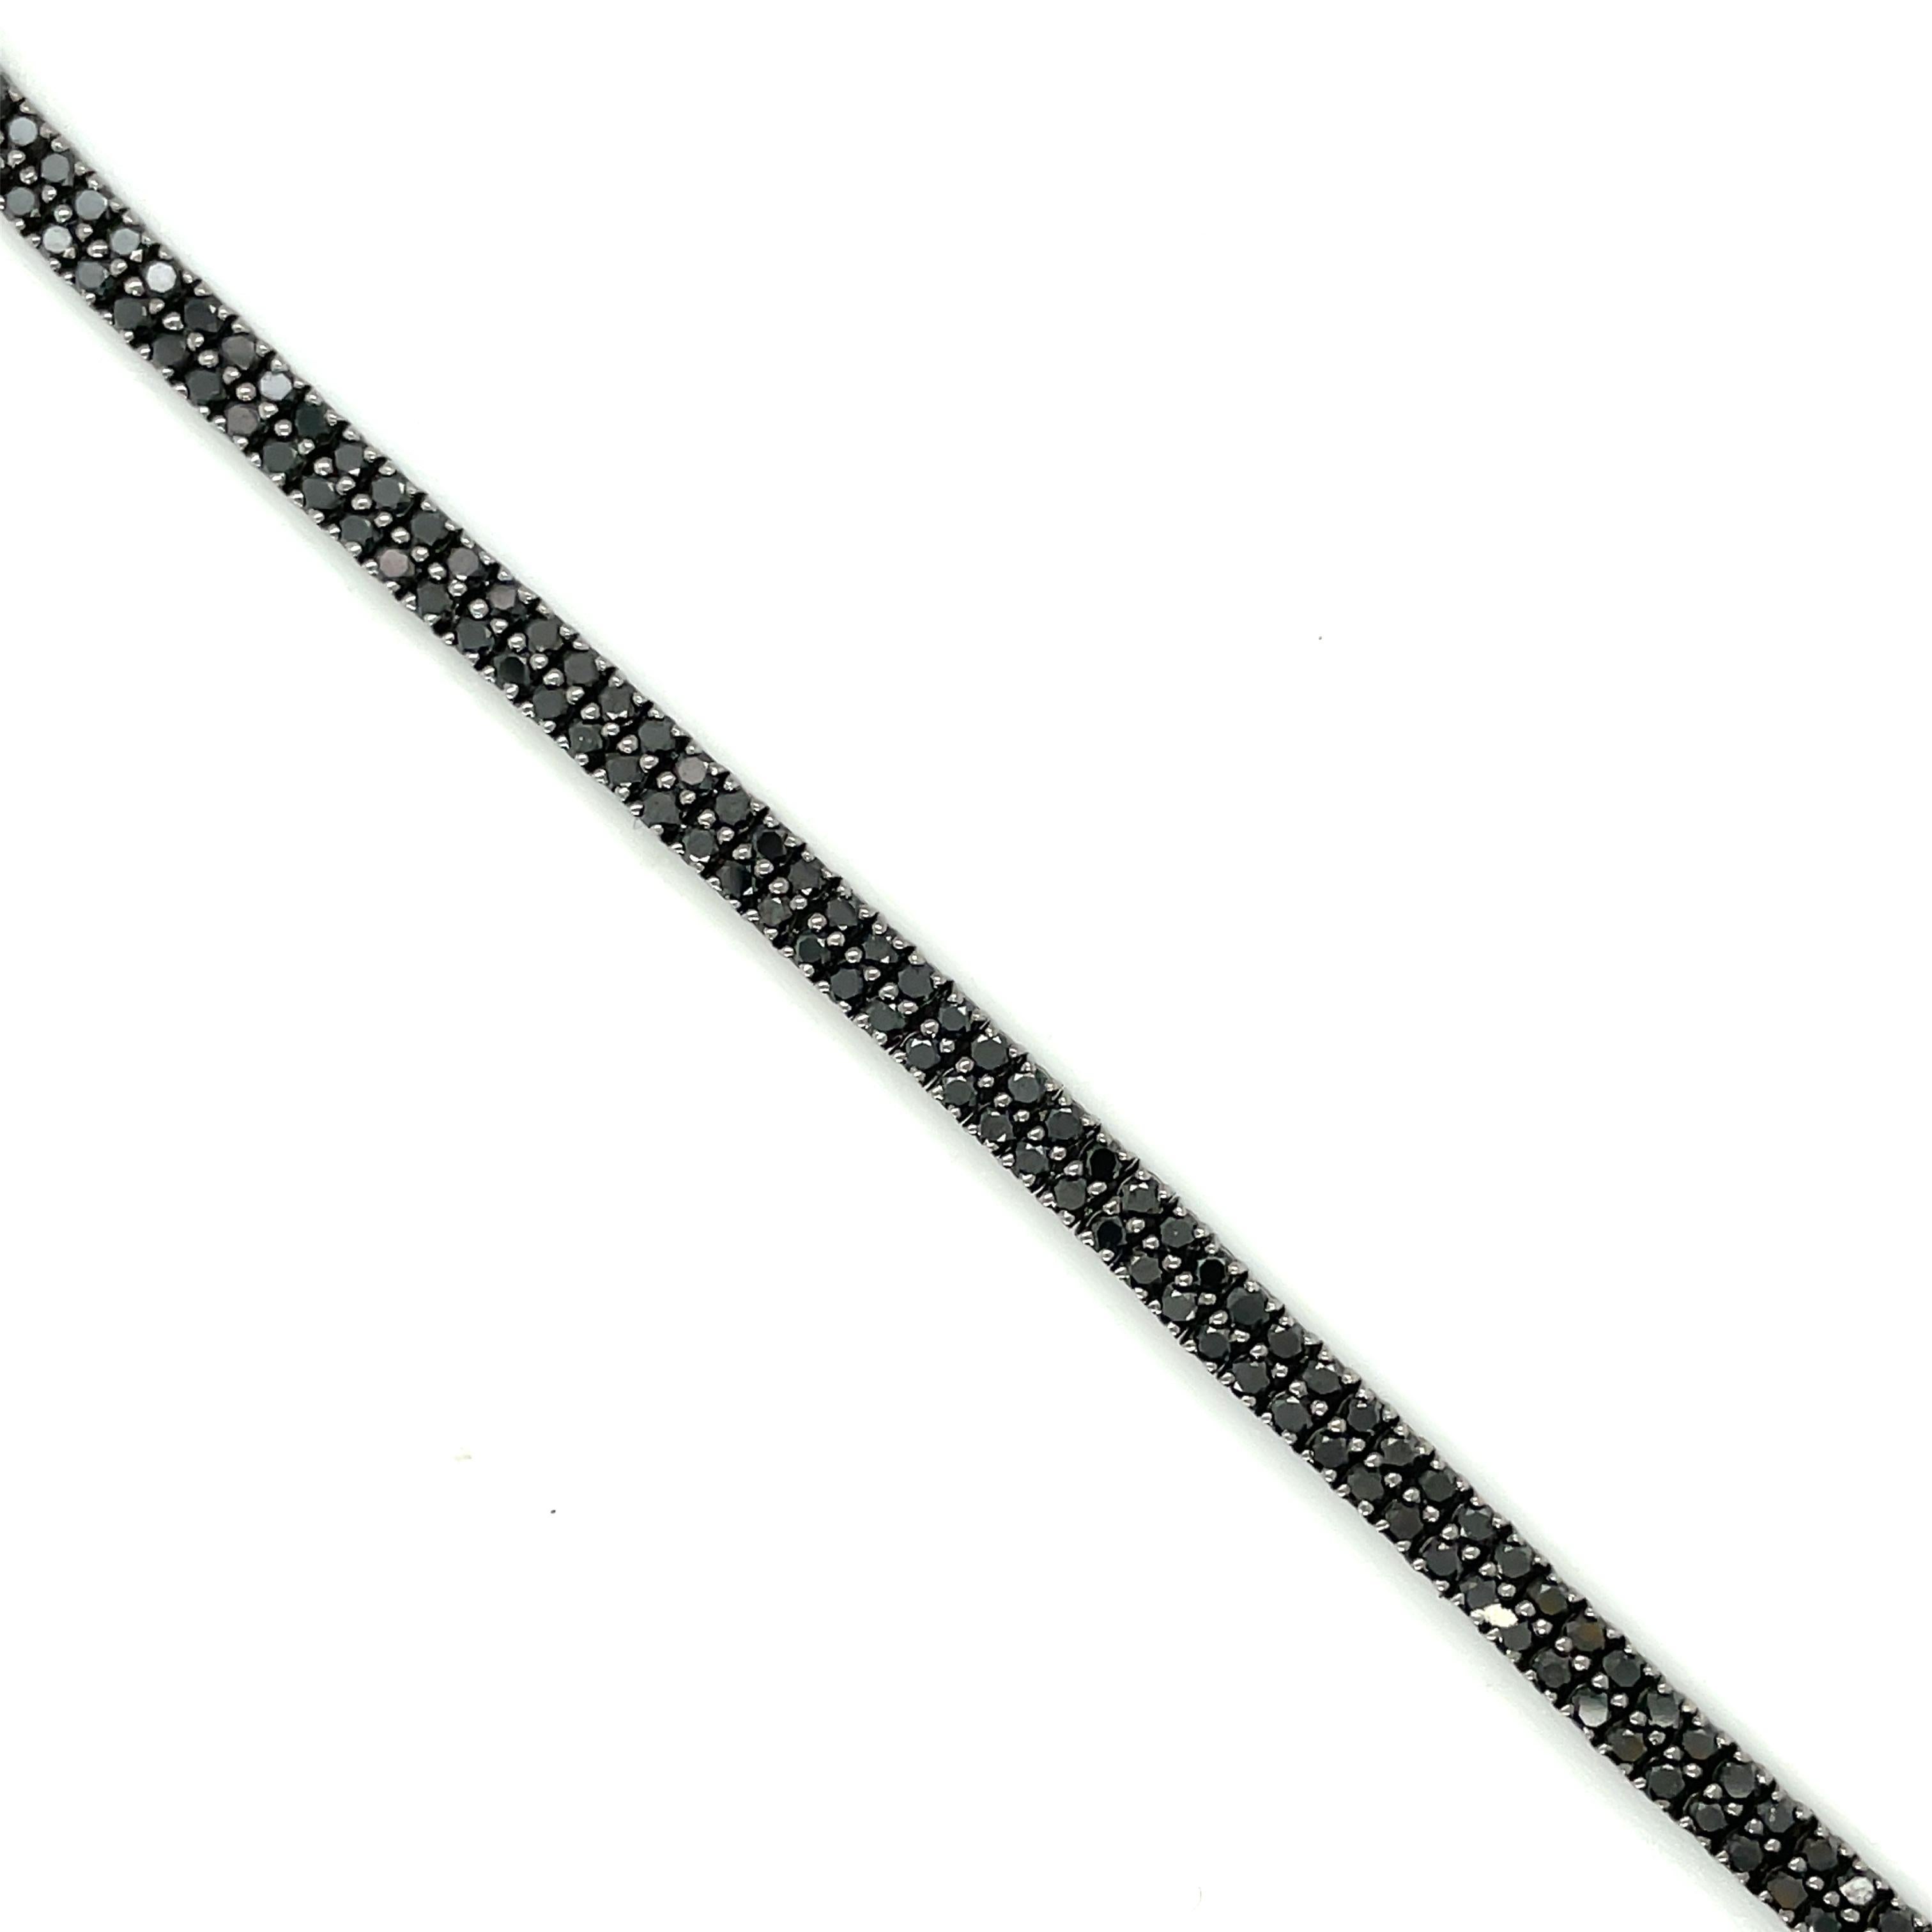 Black Rhodium and Black Diamond Double Tennis Bracelet

Grams 14.0